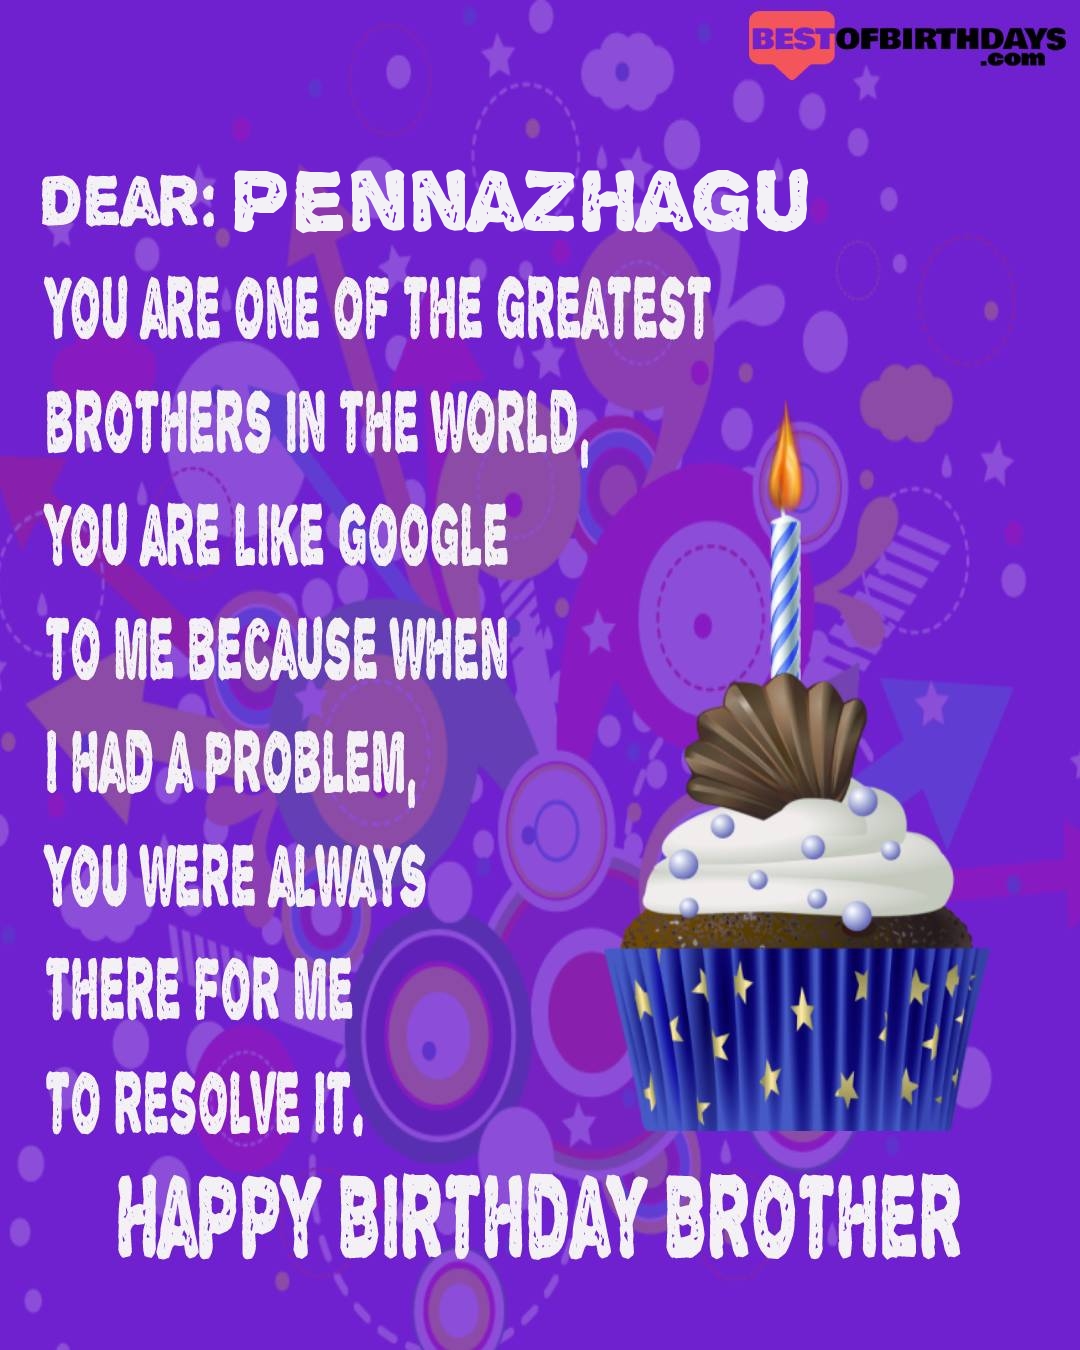 Happy birthday pennazhagu bhai brother bro